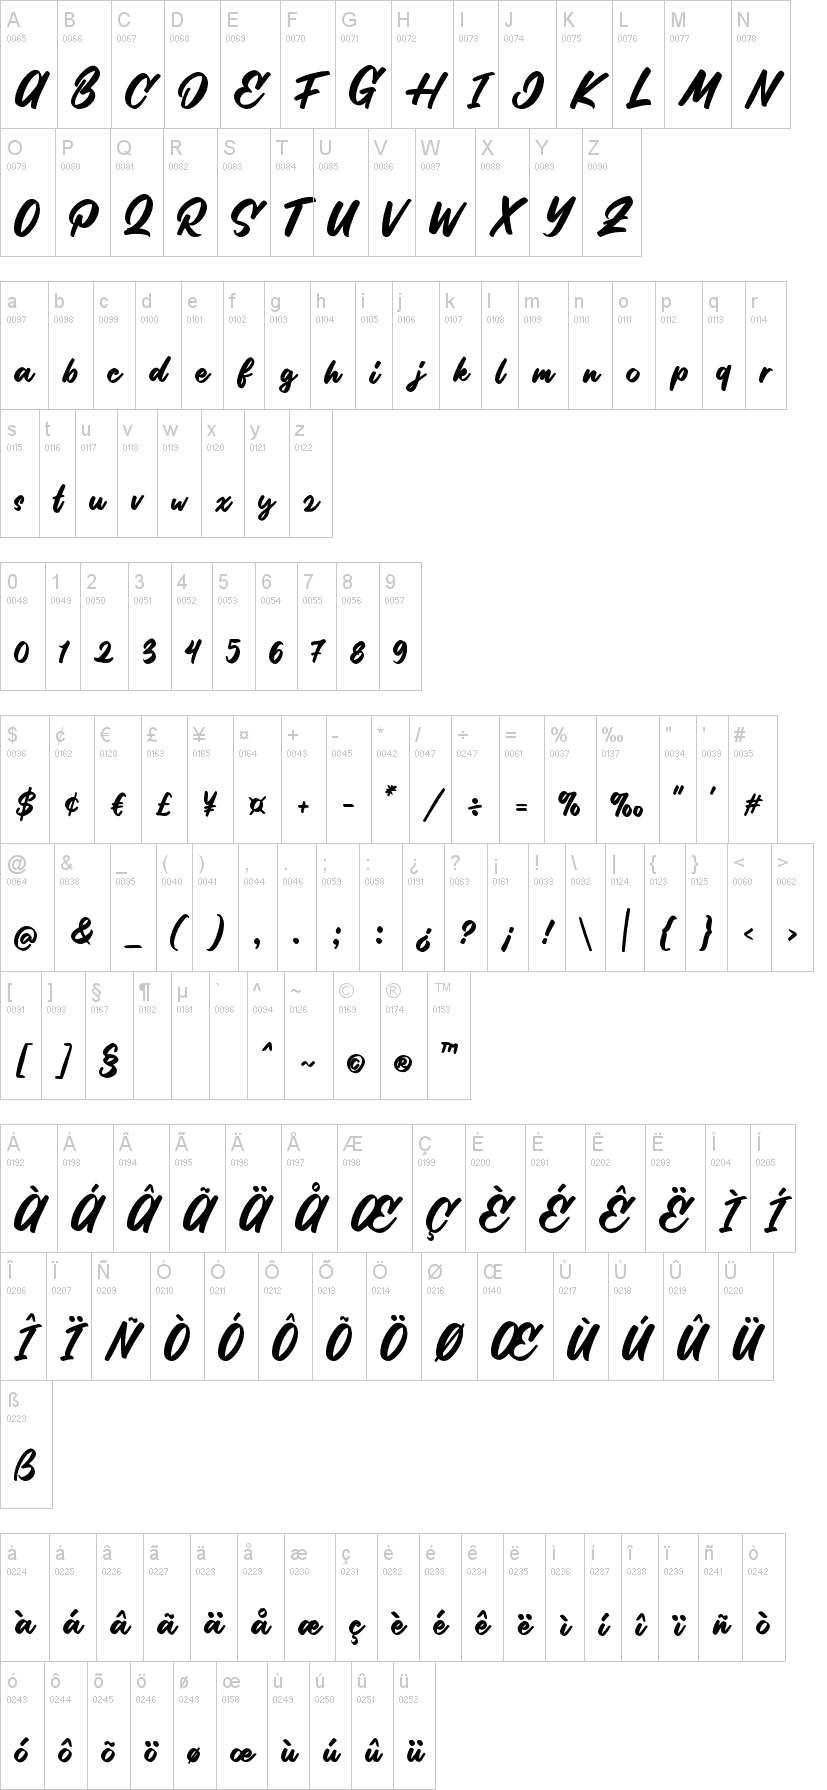 Stilda Script